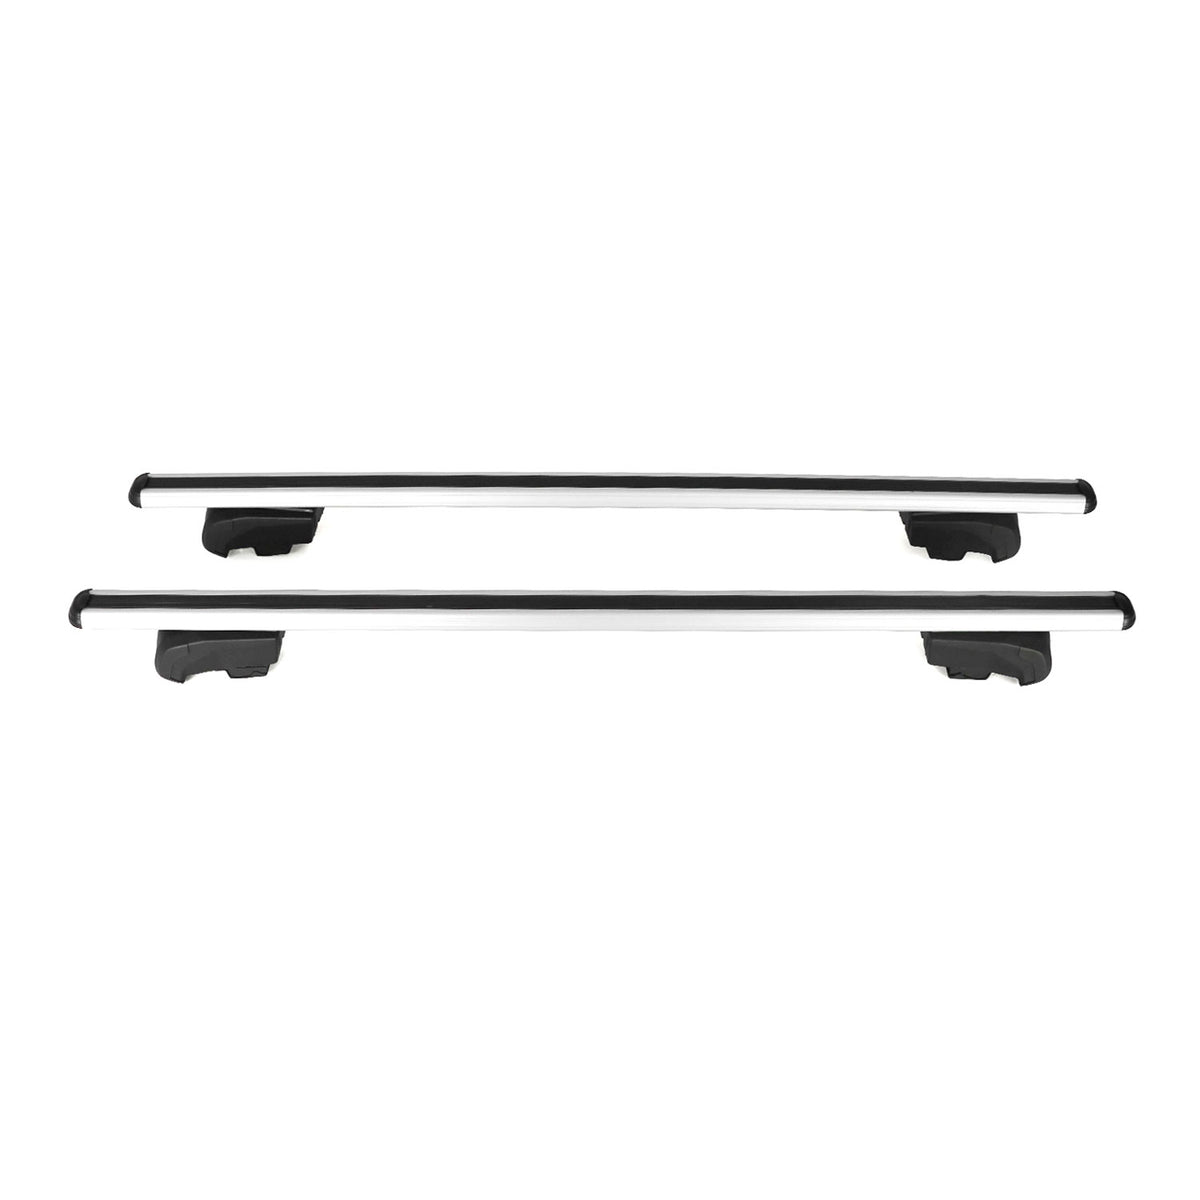 Roof rack luggage rack for Kia Soul II 2014-2019 cross bars TÜV ABE aluminum gray 2x